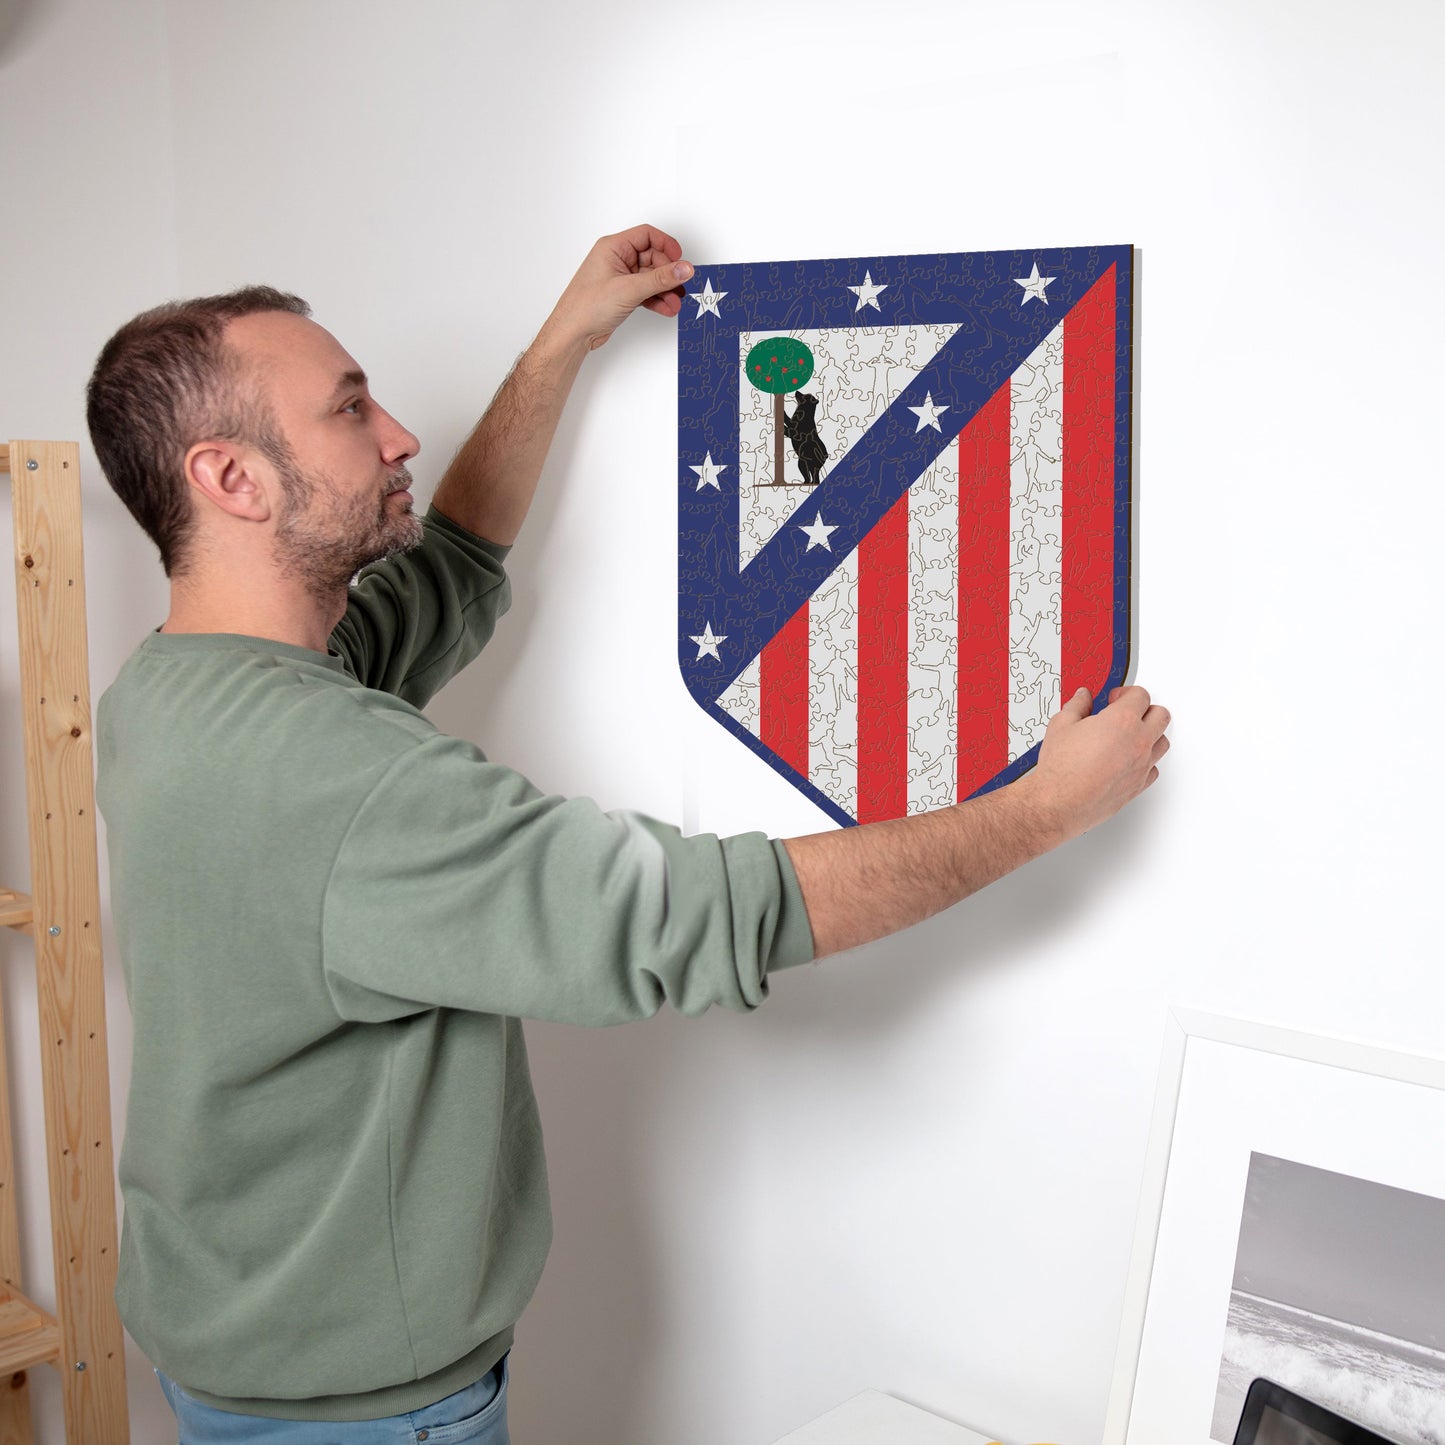 Atlético de Madrid® Escudo - Rompecabezas de Madera